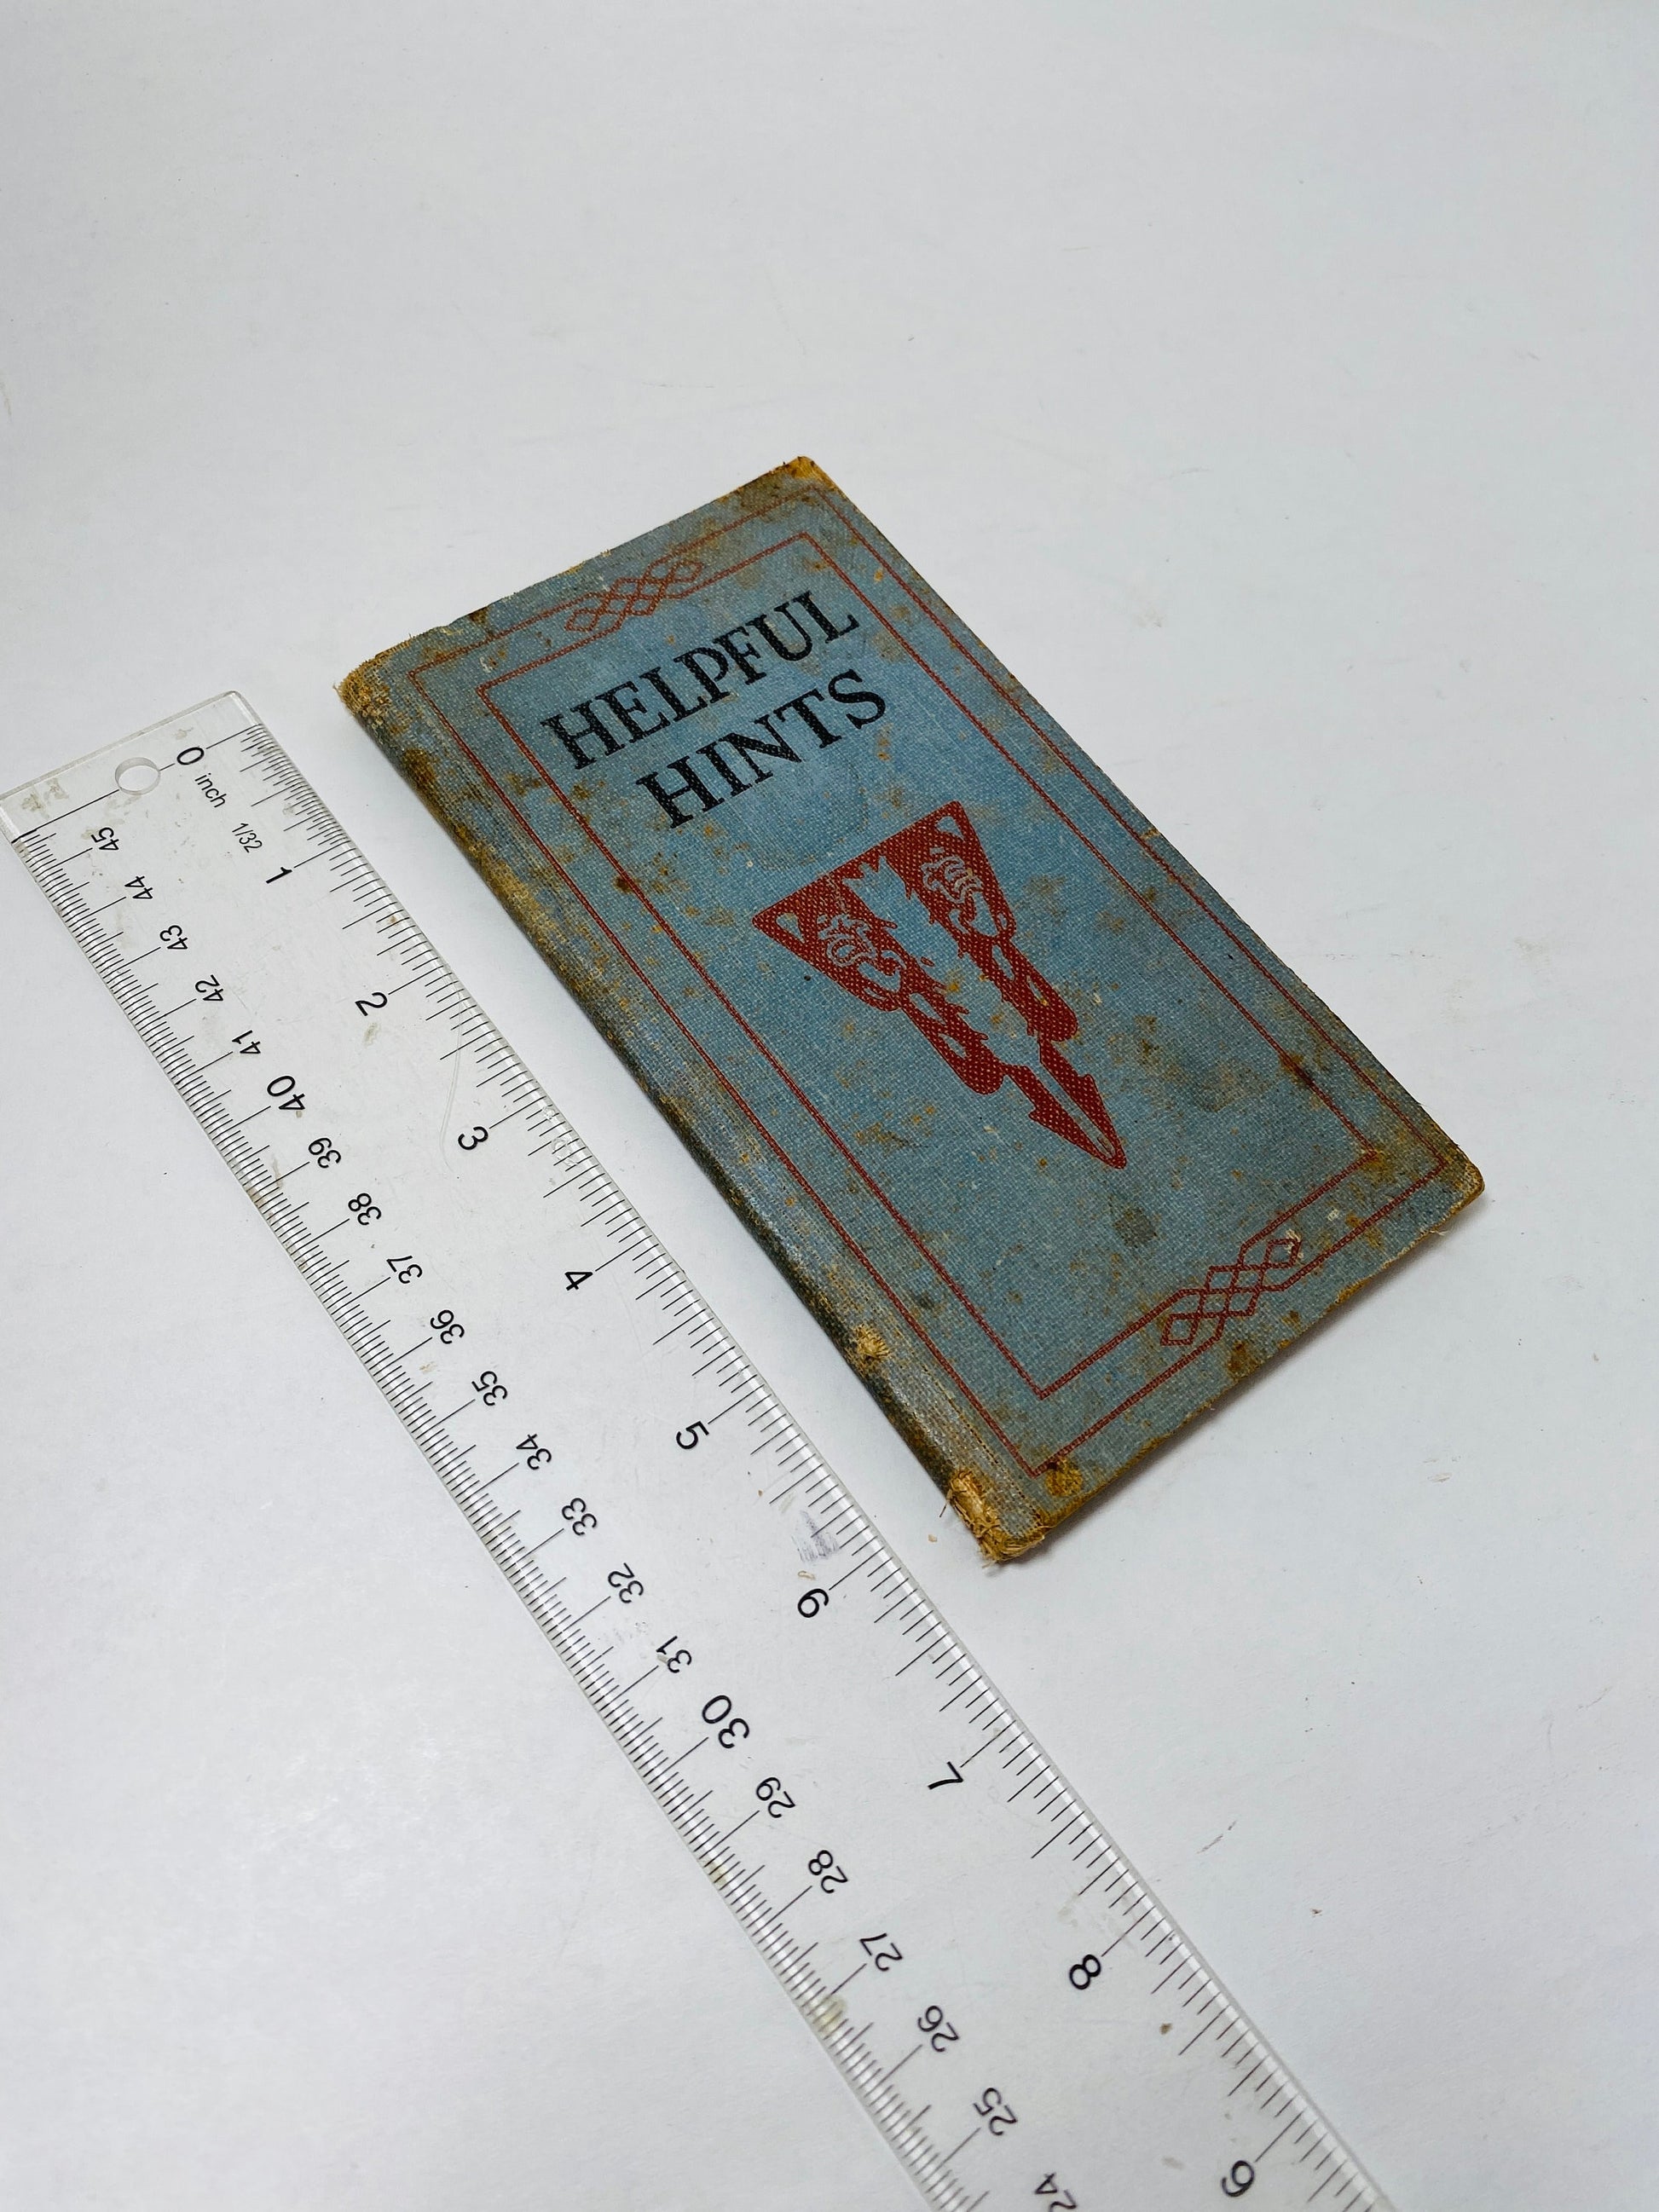 1911 vintage grammar tool dictionary small miniature antique best pocket book by James Champlin Fernald Funk & Wagnalls